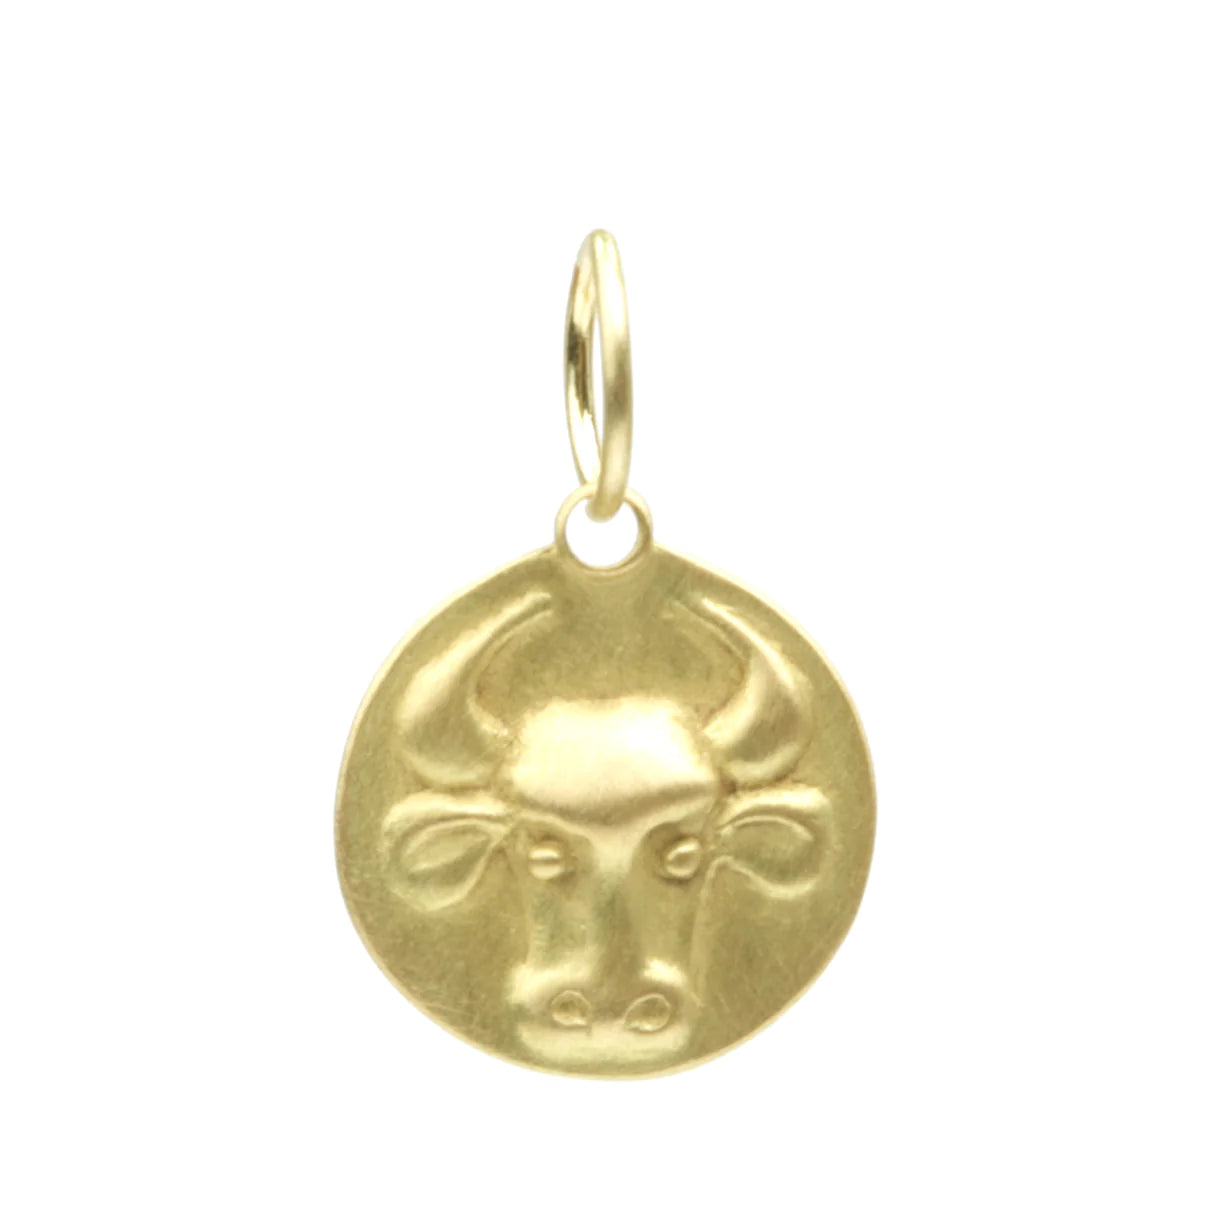 zodiac medal pendant necklace - taurus